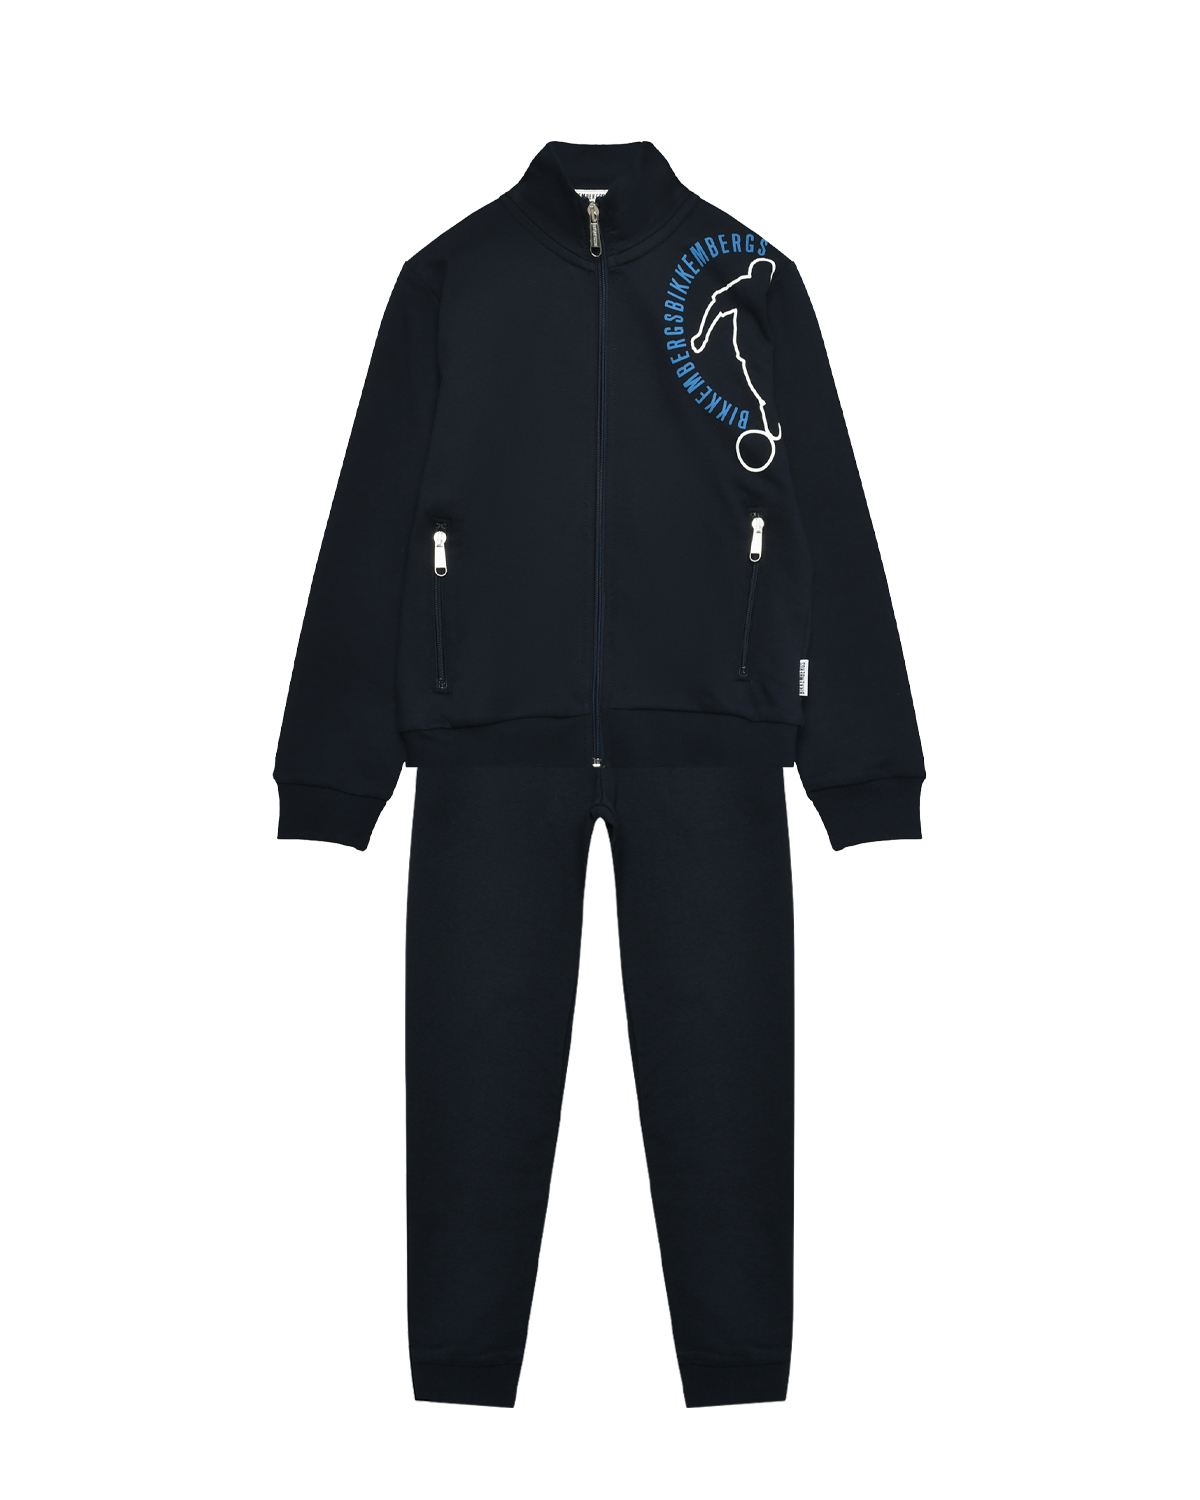 Спортивный костюм куртка с принтом футболиста + брюки, темно-синий Bikkembergs, размер 128, цвет нет цвета